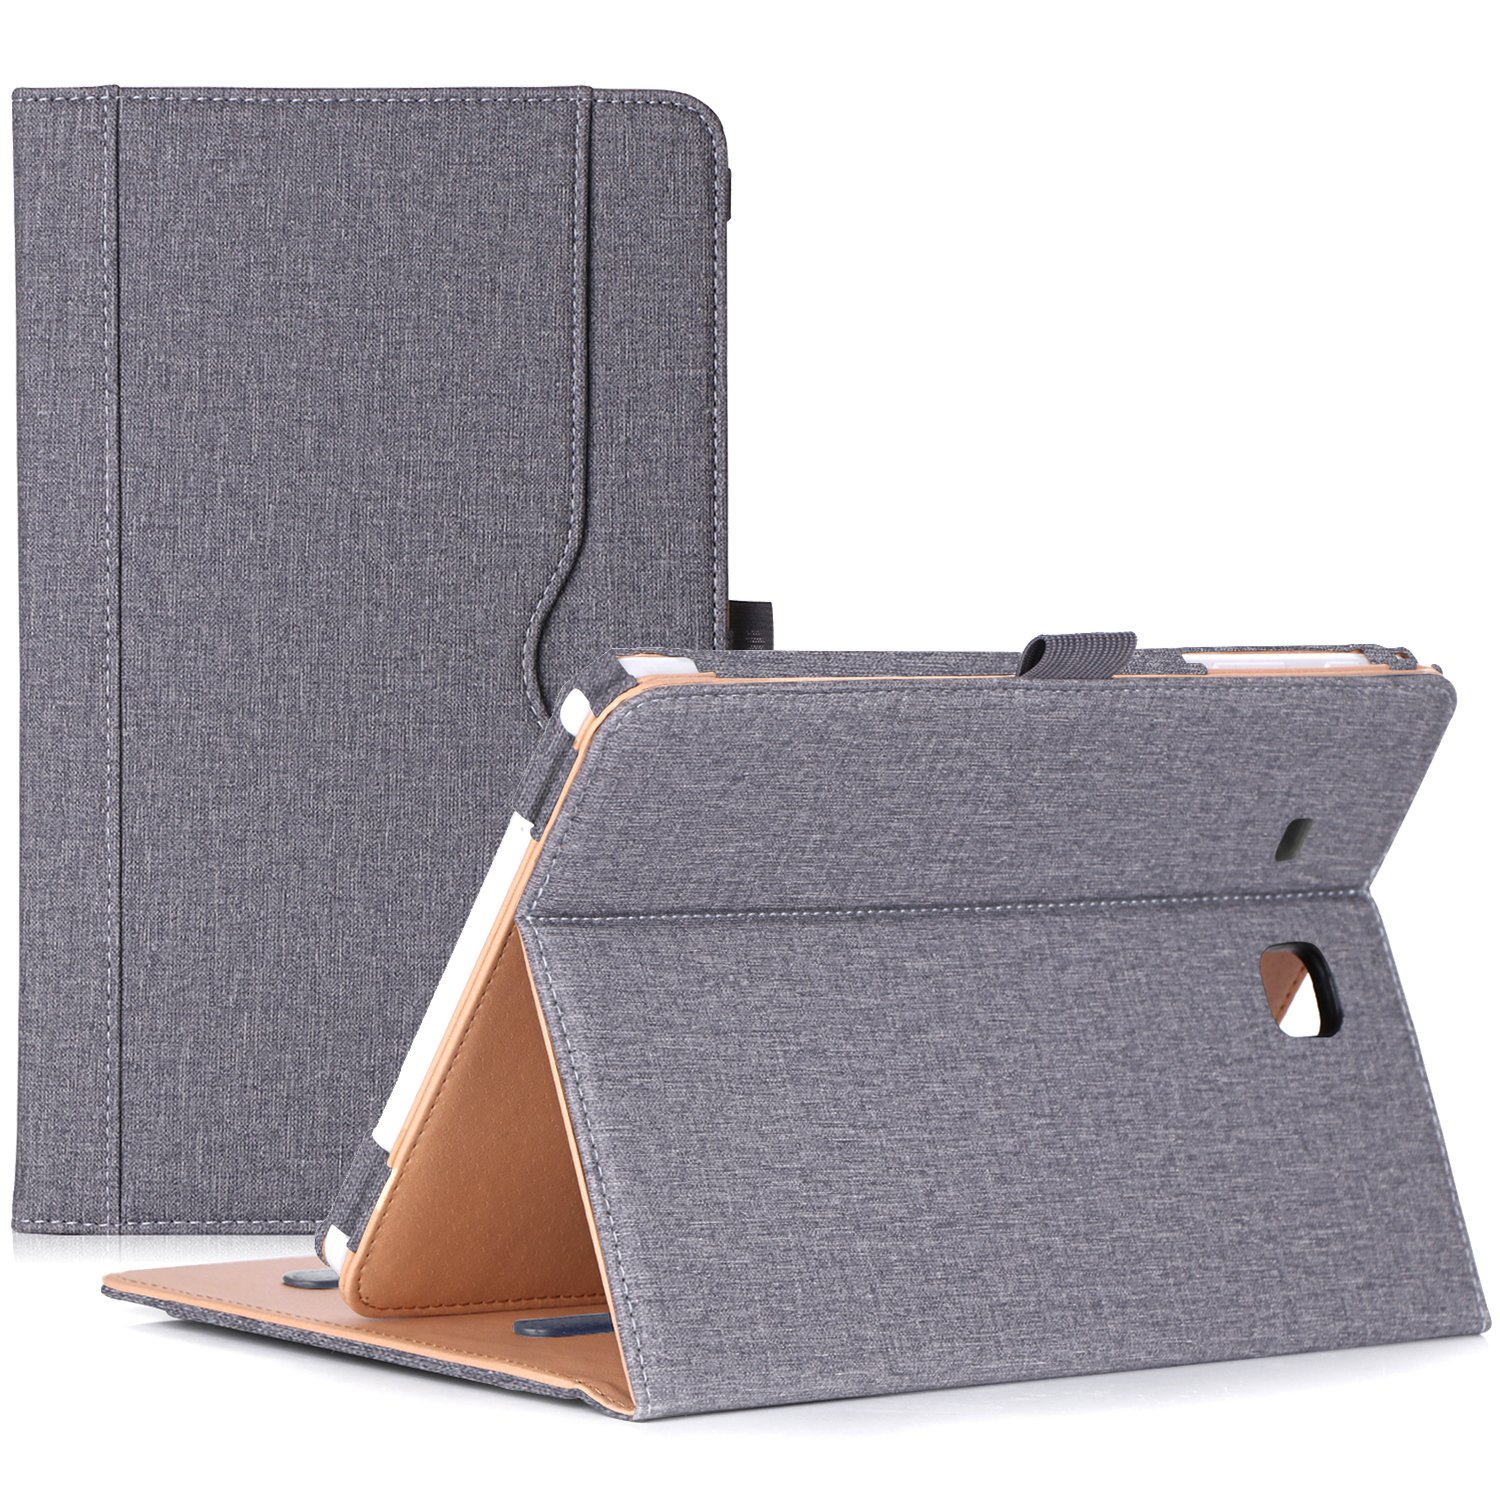 ProCase Samsung Galaxy Tab E 9.6 Case – Vintage Stand Folio Case Cover for Galaxy Tab E 9.6"/ Tab E Nook 9.6-Inch Tablet (SM